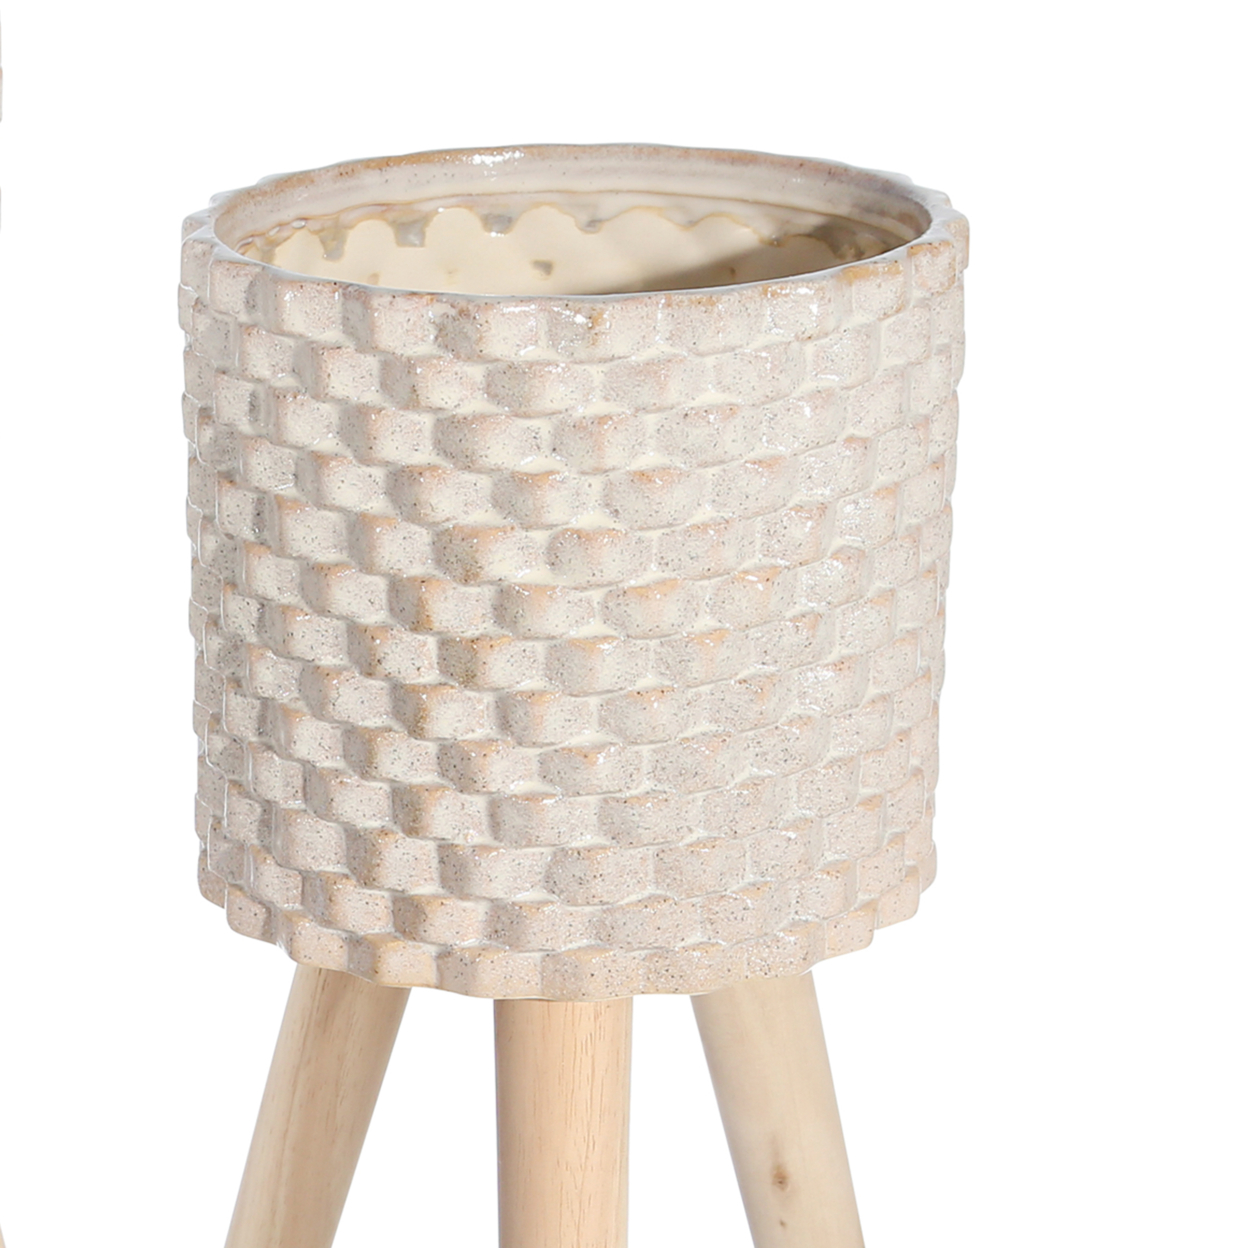 Textured Ceramic Planter With Tripod Legs, Set Of 2, Cream And Brown- Saltoro Sherpi